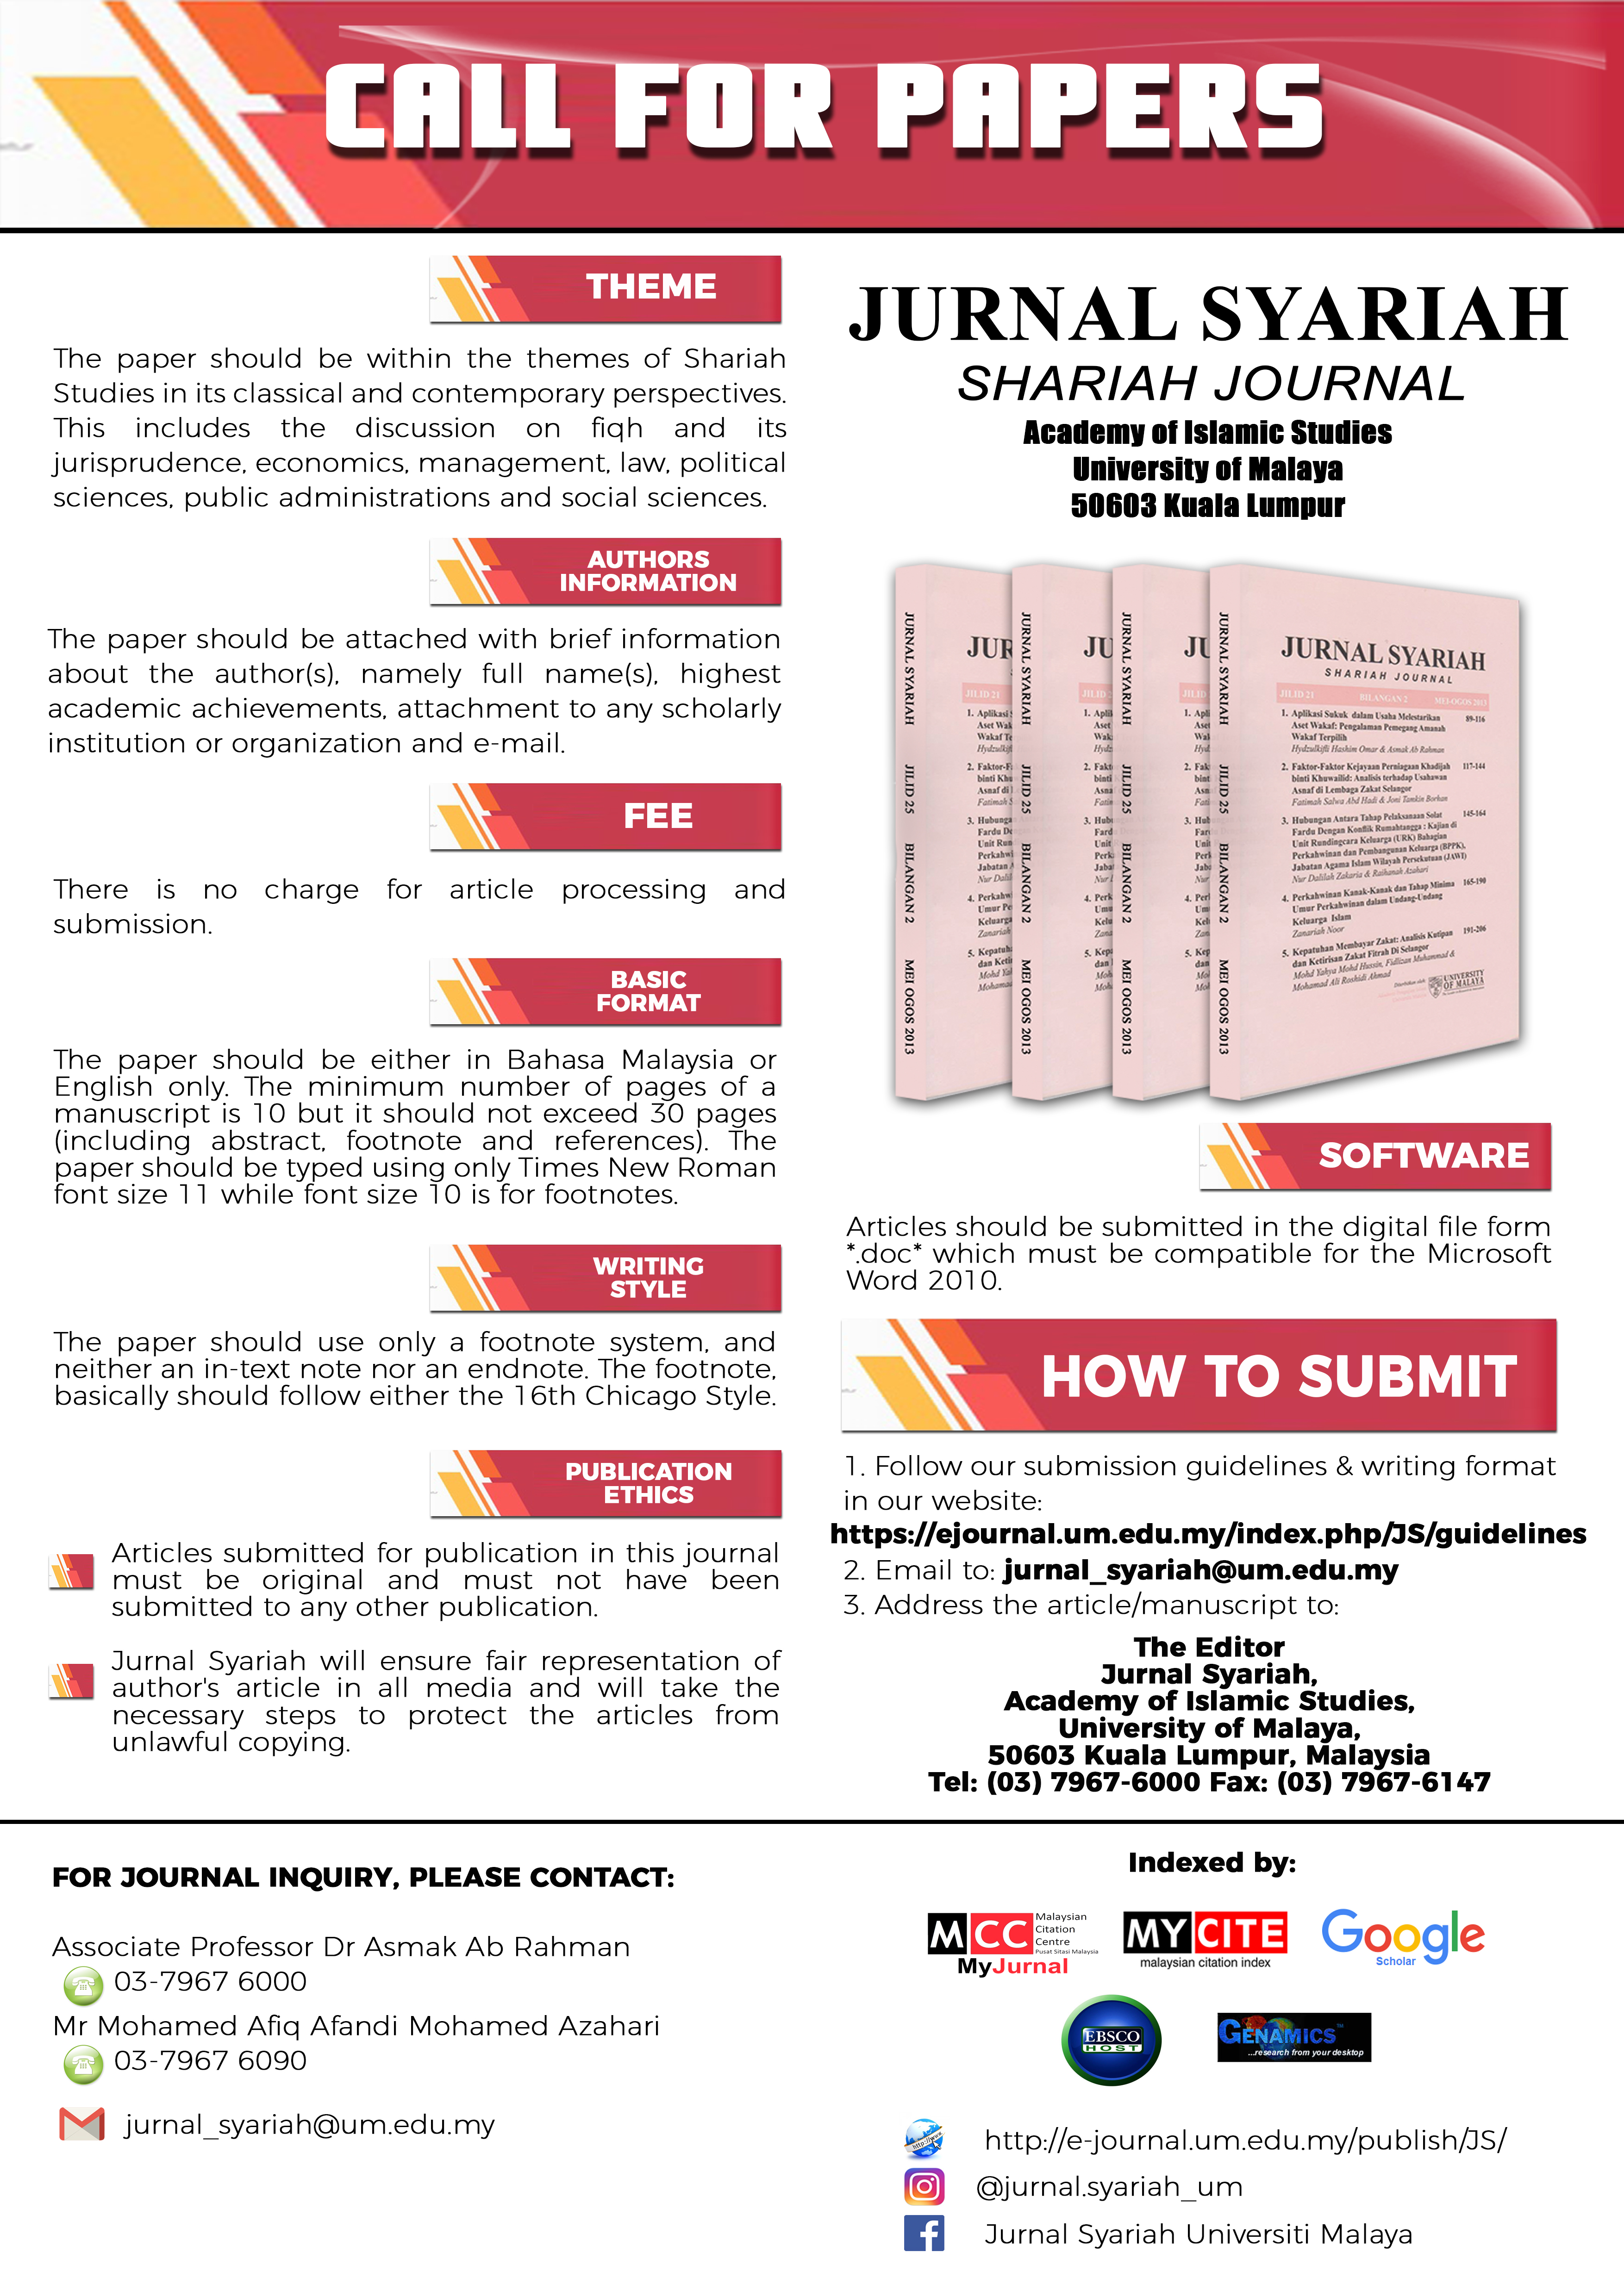 About The Journal Jurnal Syariah